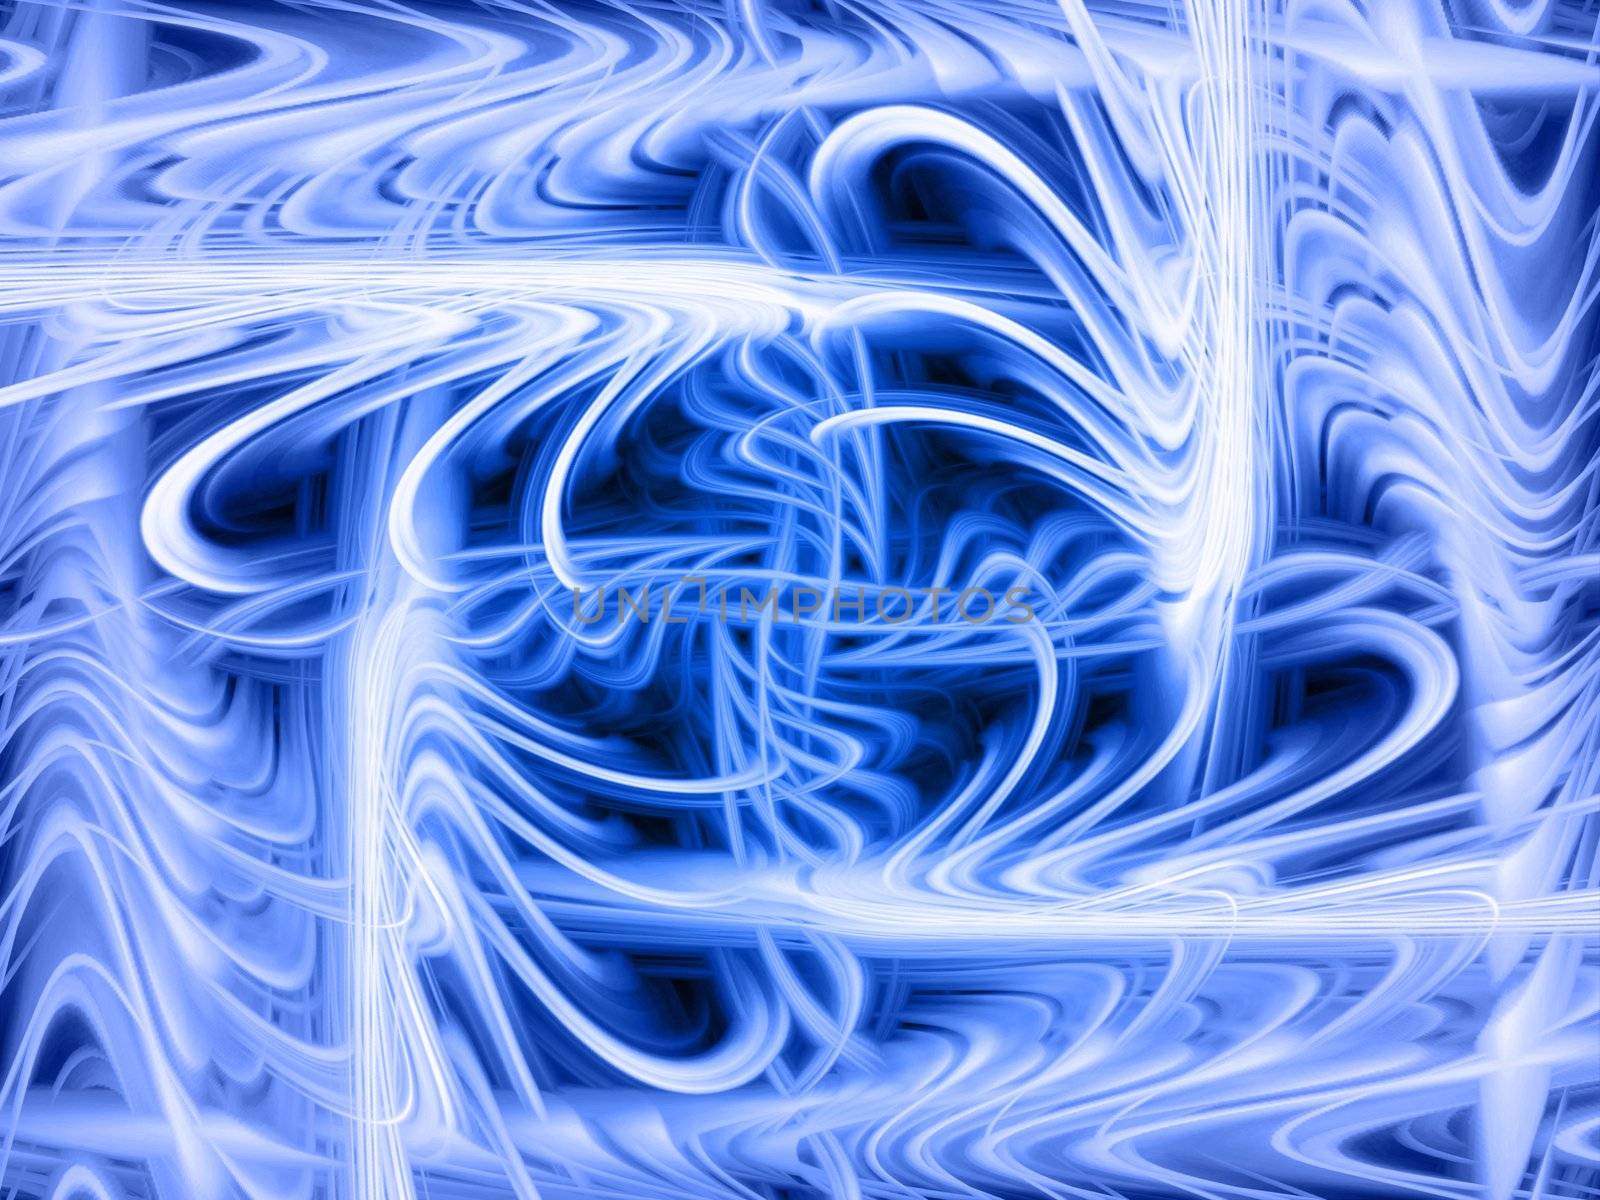 Curved lines of blue light on black background.